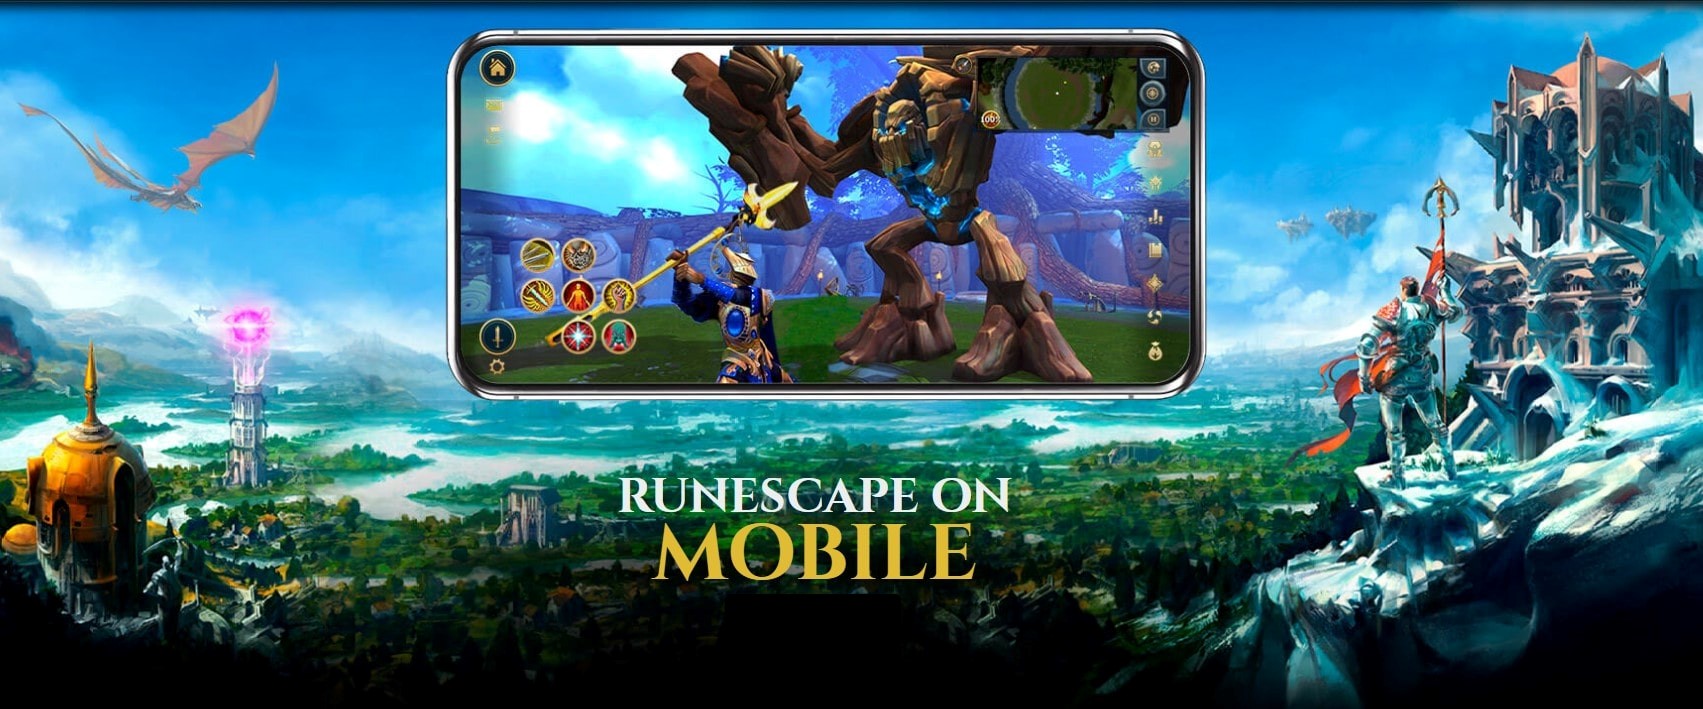 RuneScape Mobile - Cross-platform MMORPG